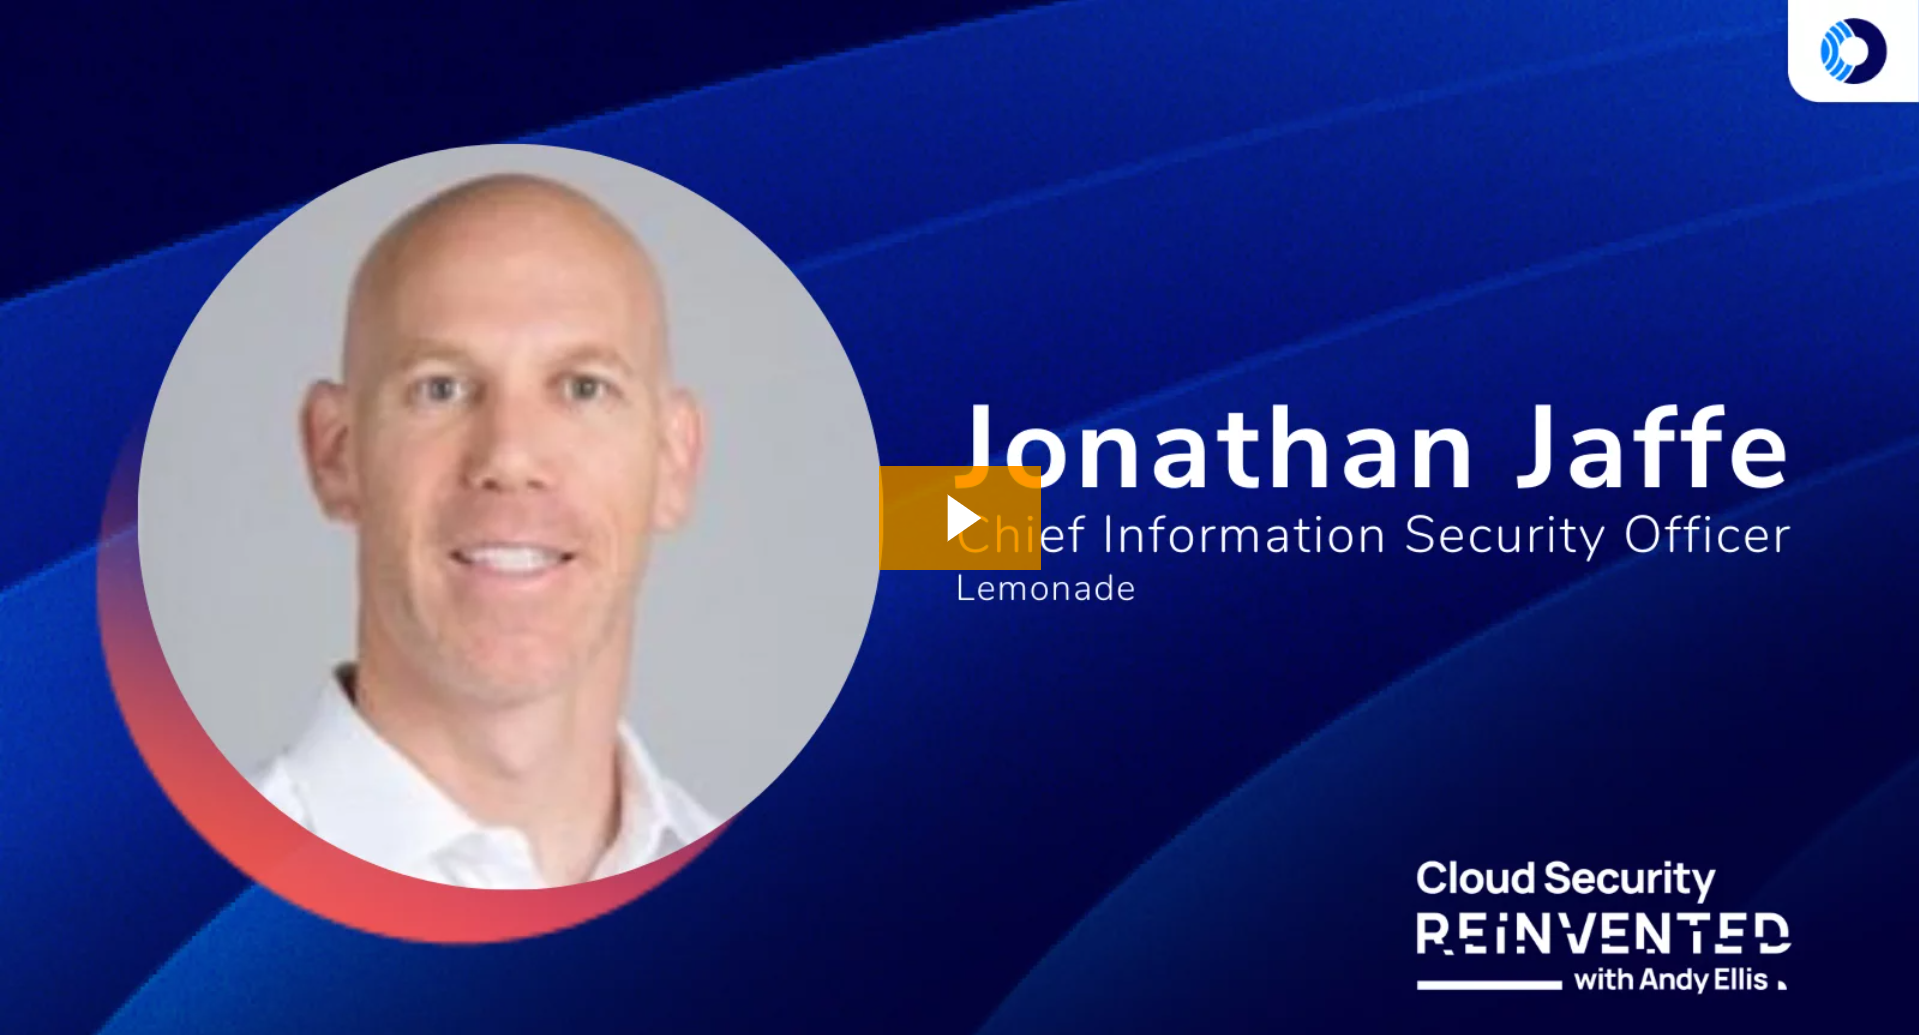 Cloud Security Reinvented: Jonathan Jaffe